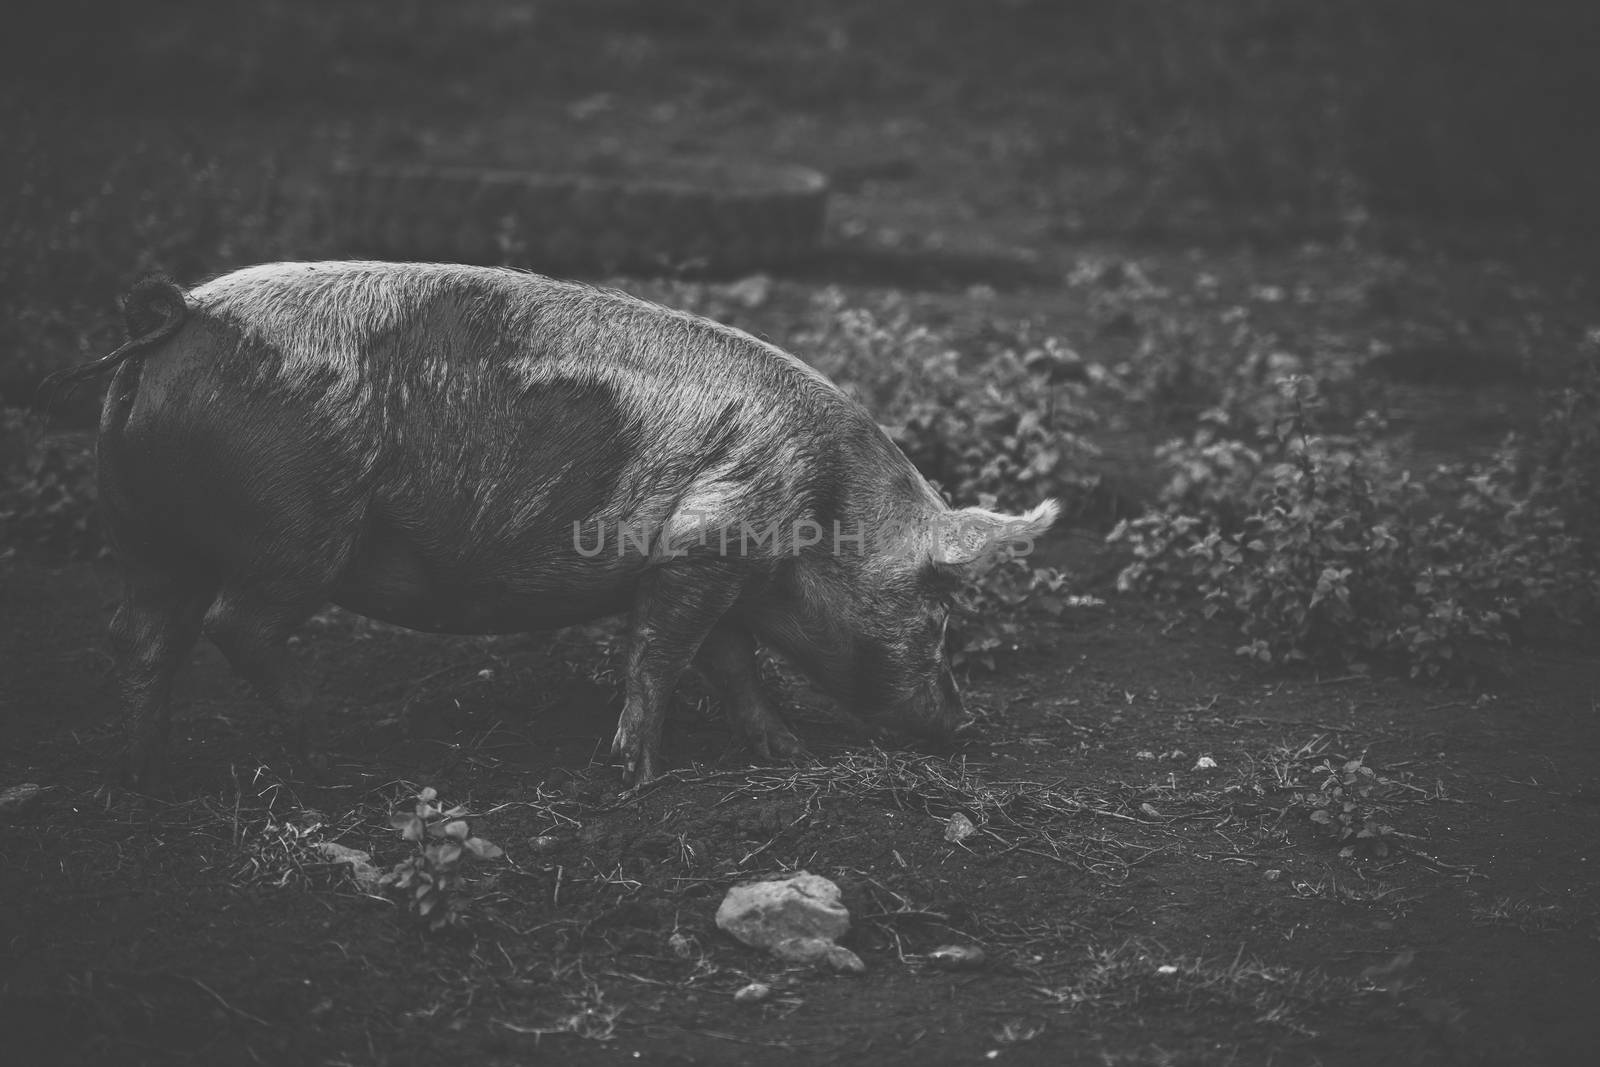 Pig on the farm. by artistrobd